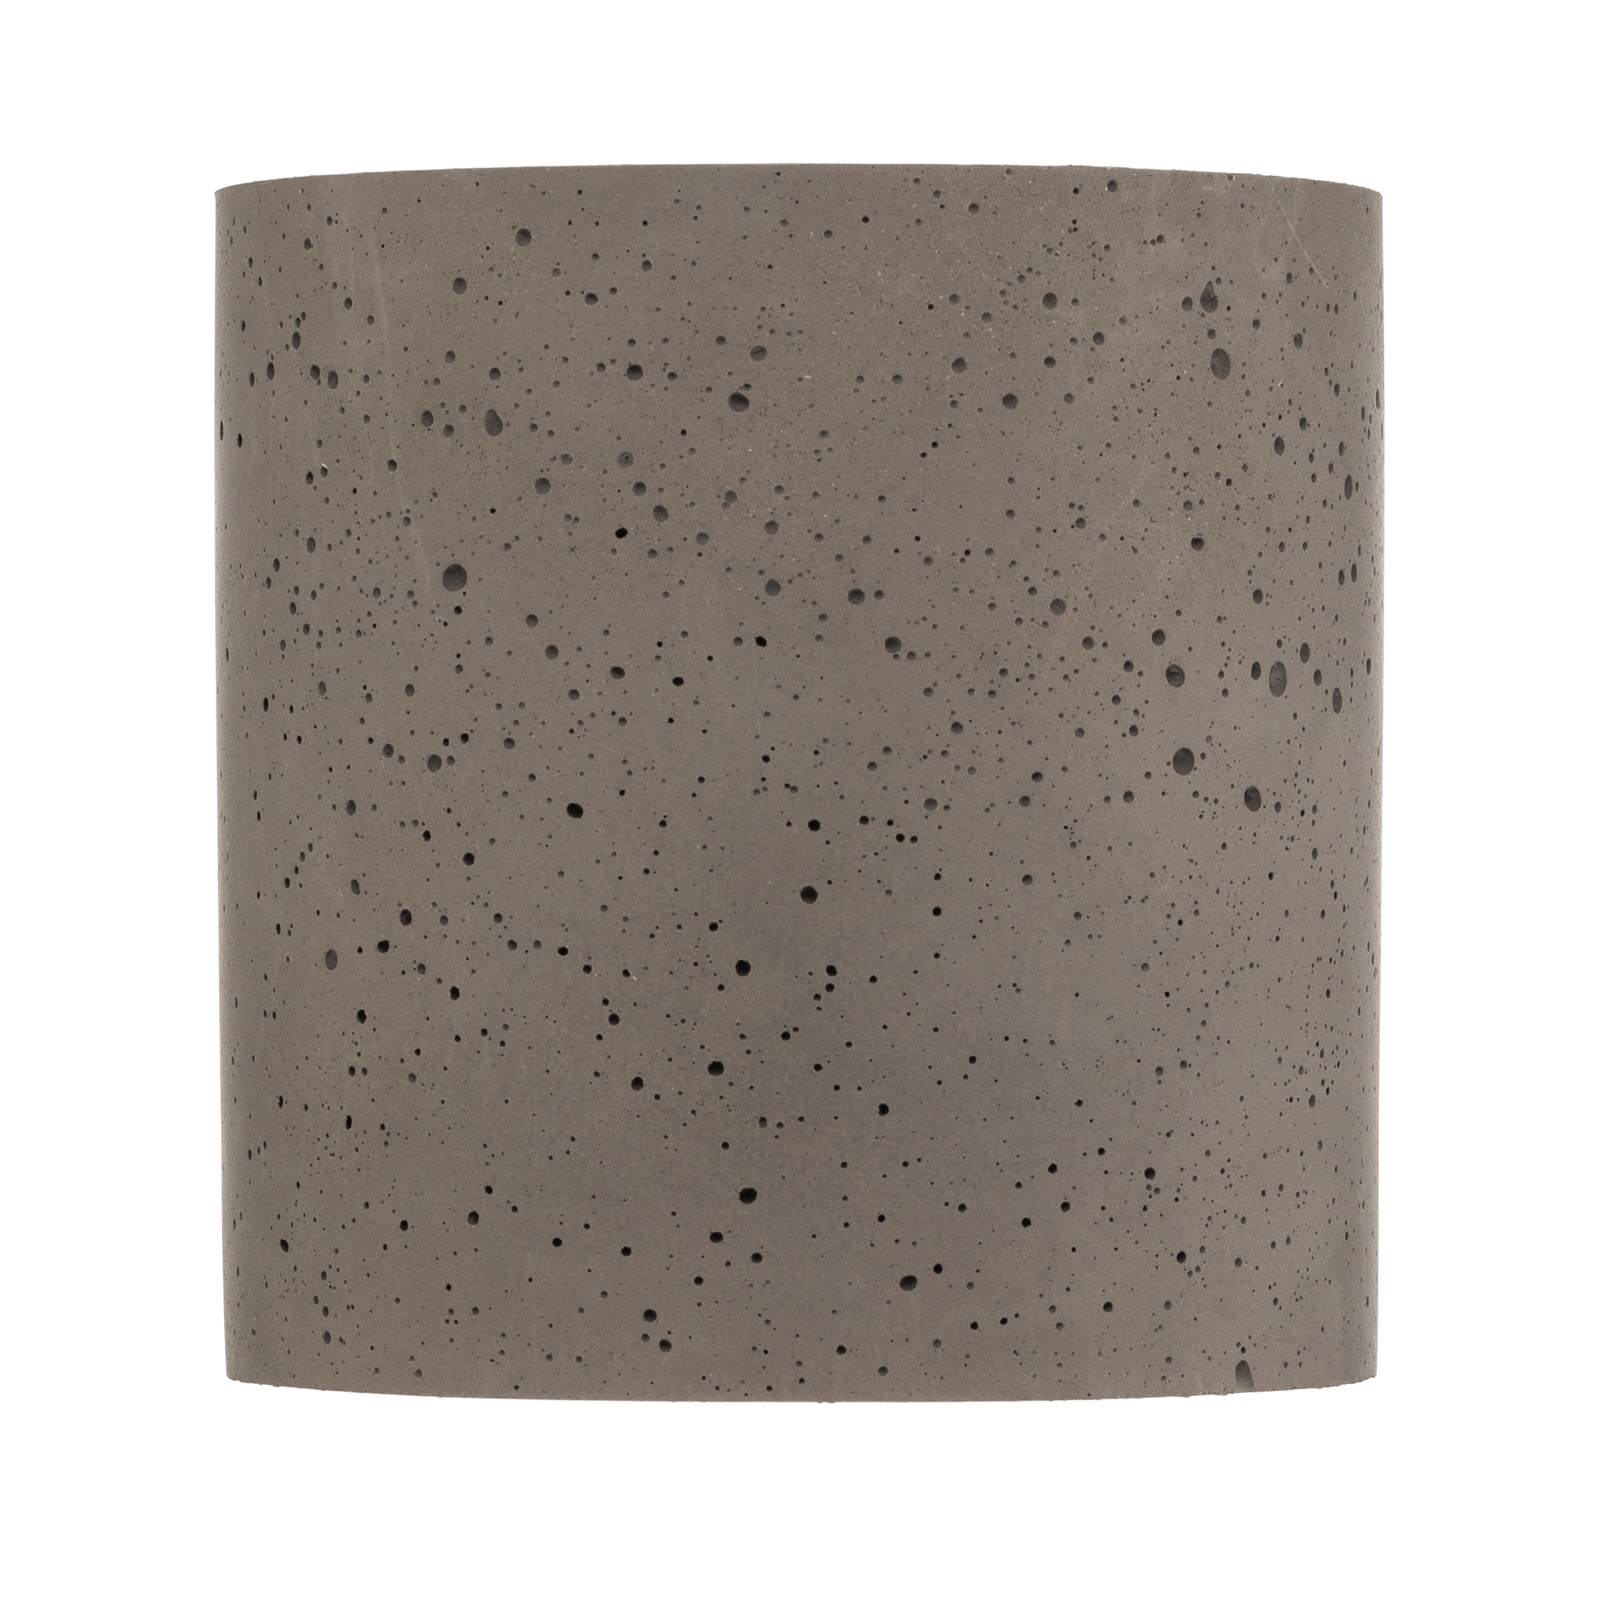 Downlight Shy M van beton, Ø 14,5 cm